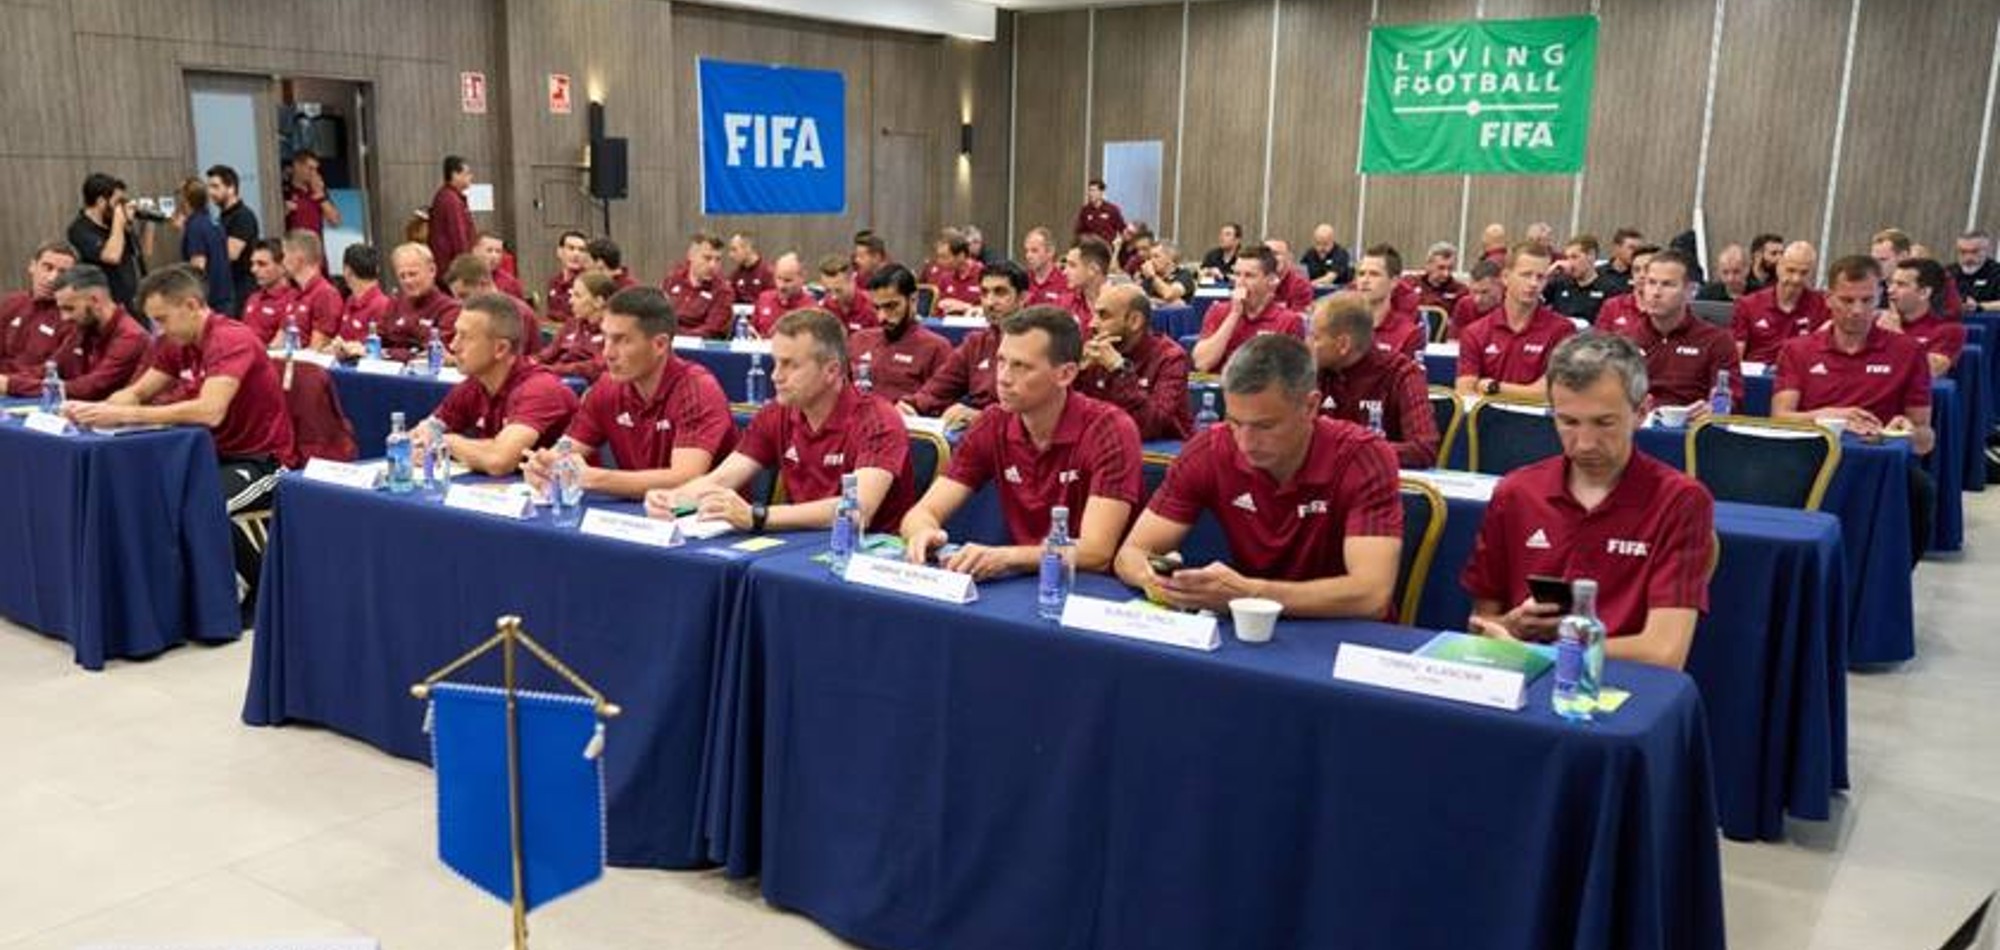 FIFA continues Referee preparations ahead of Qatar 2022